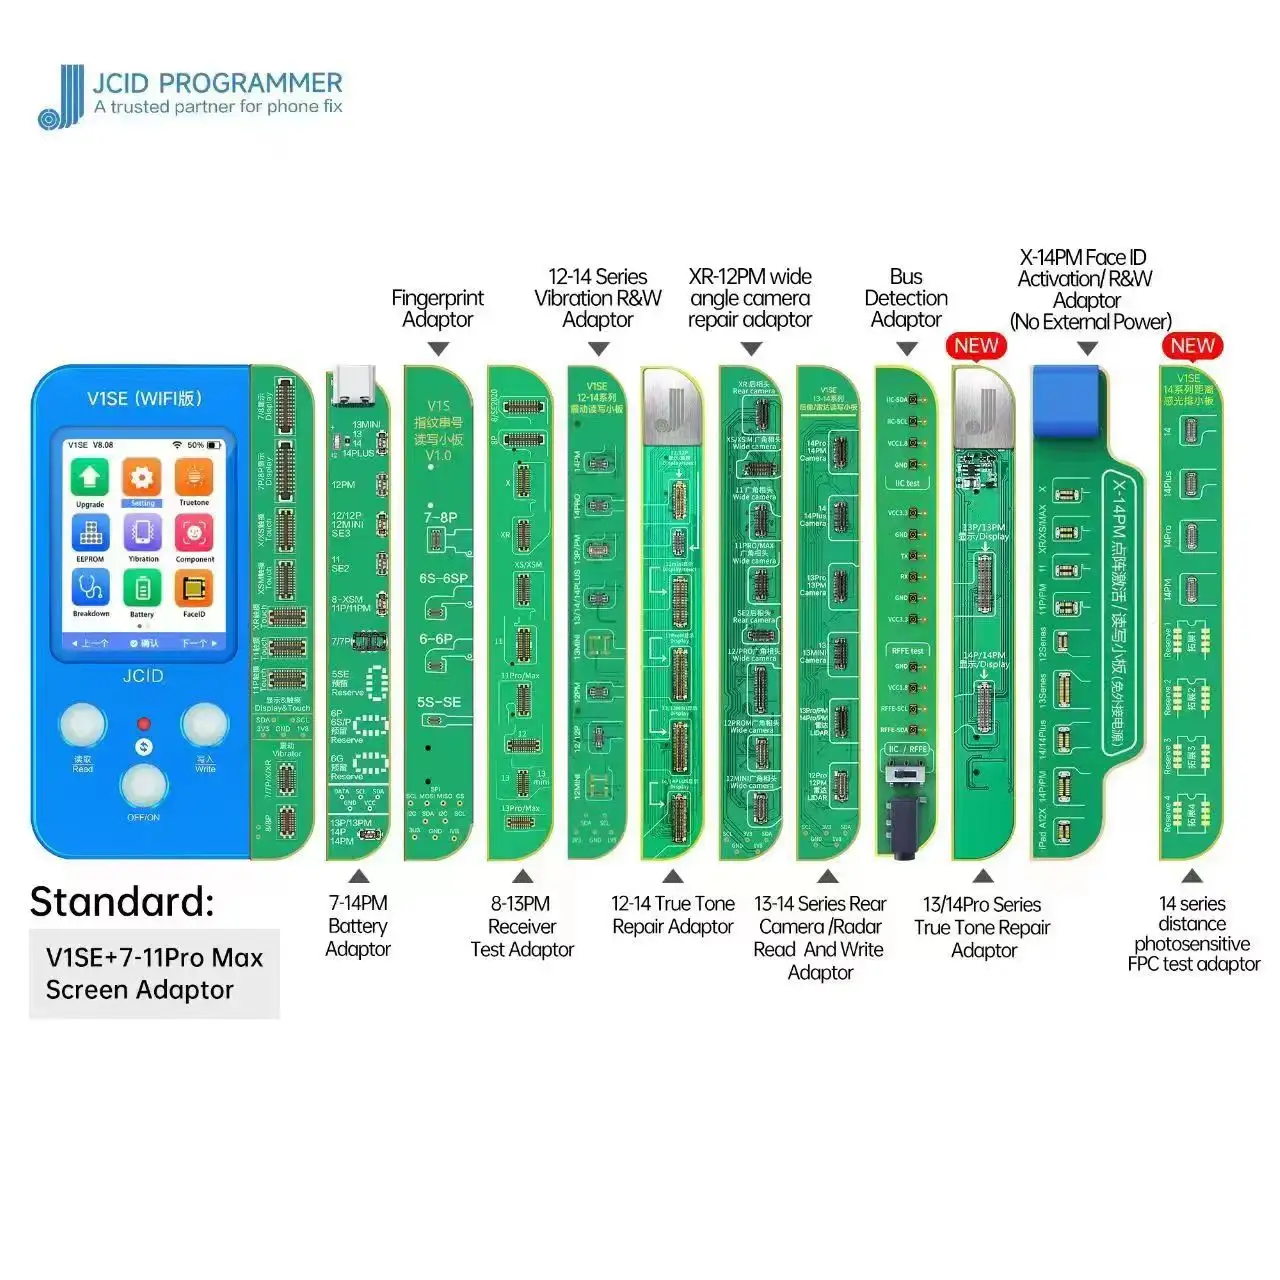 Bateria para celular LCD Dot Matrix Ferramenta de Reparo JCID V1se True Tone Facd ID Programador